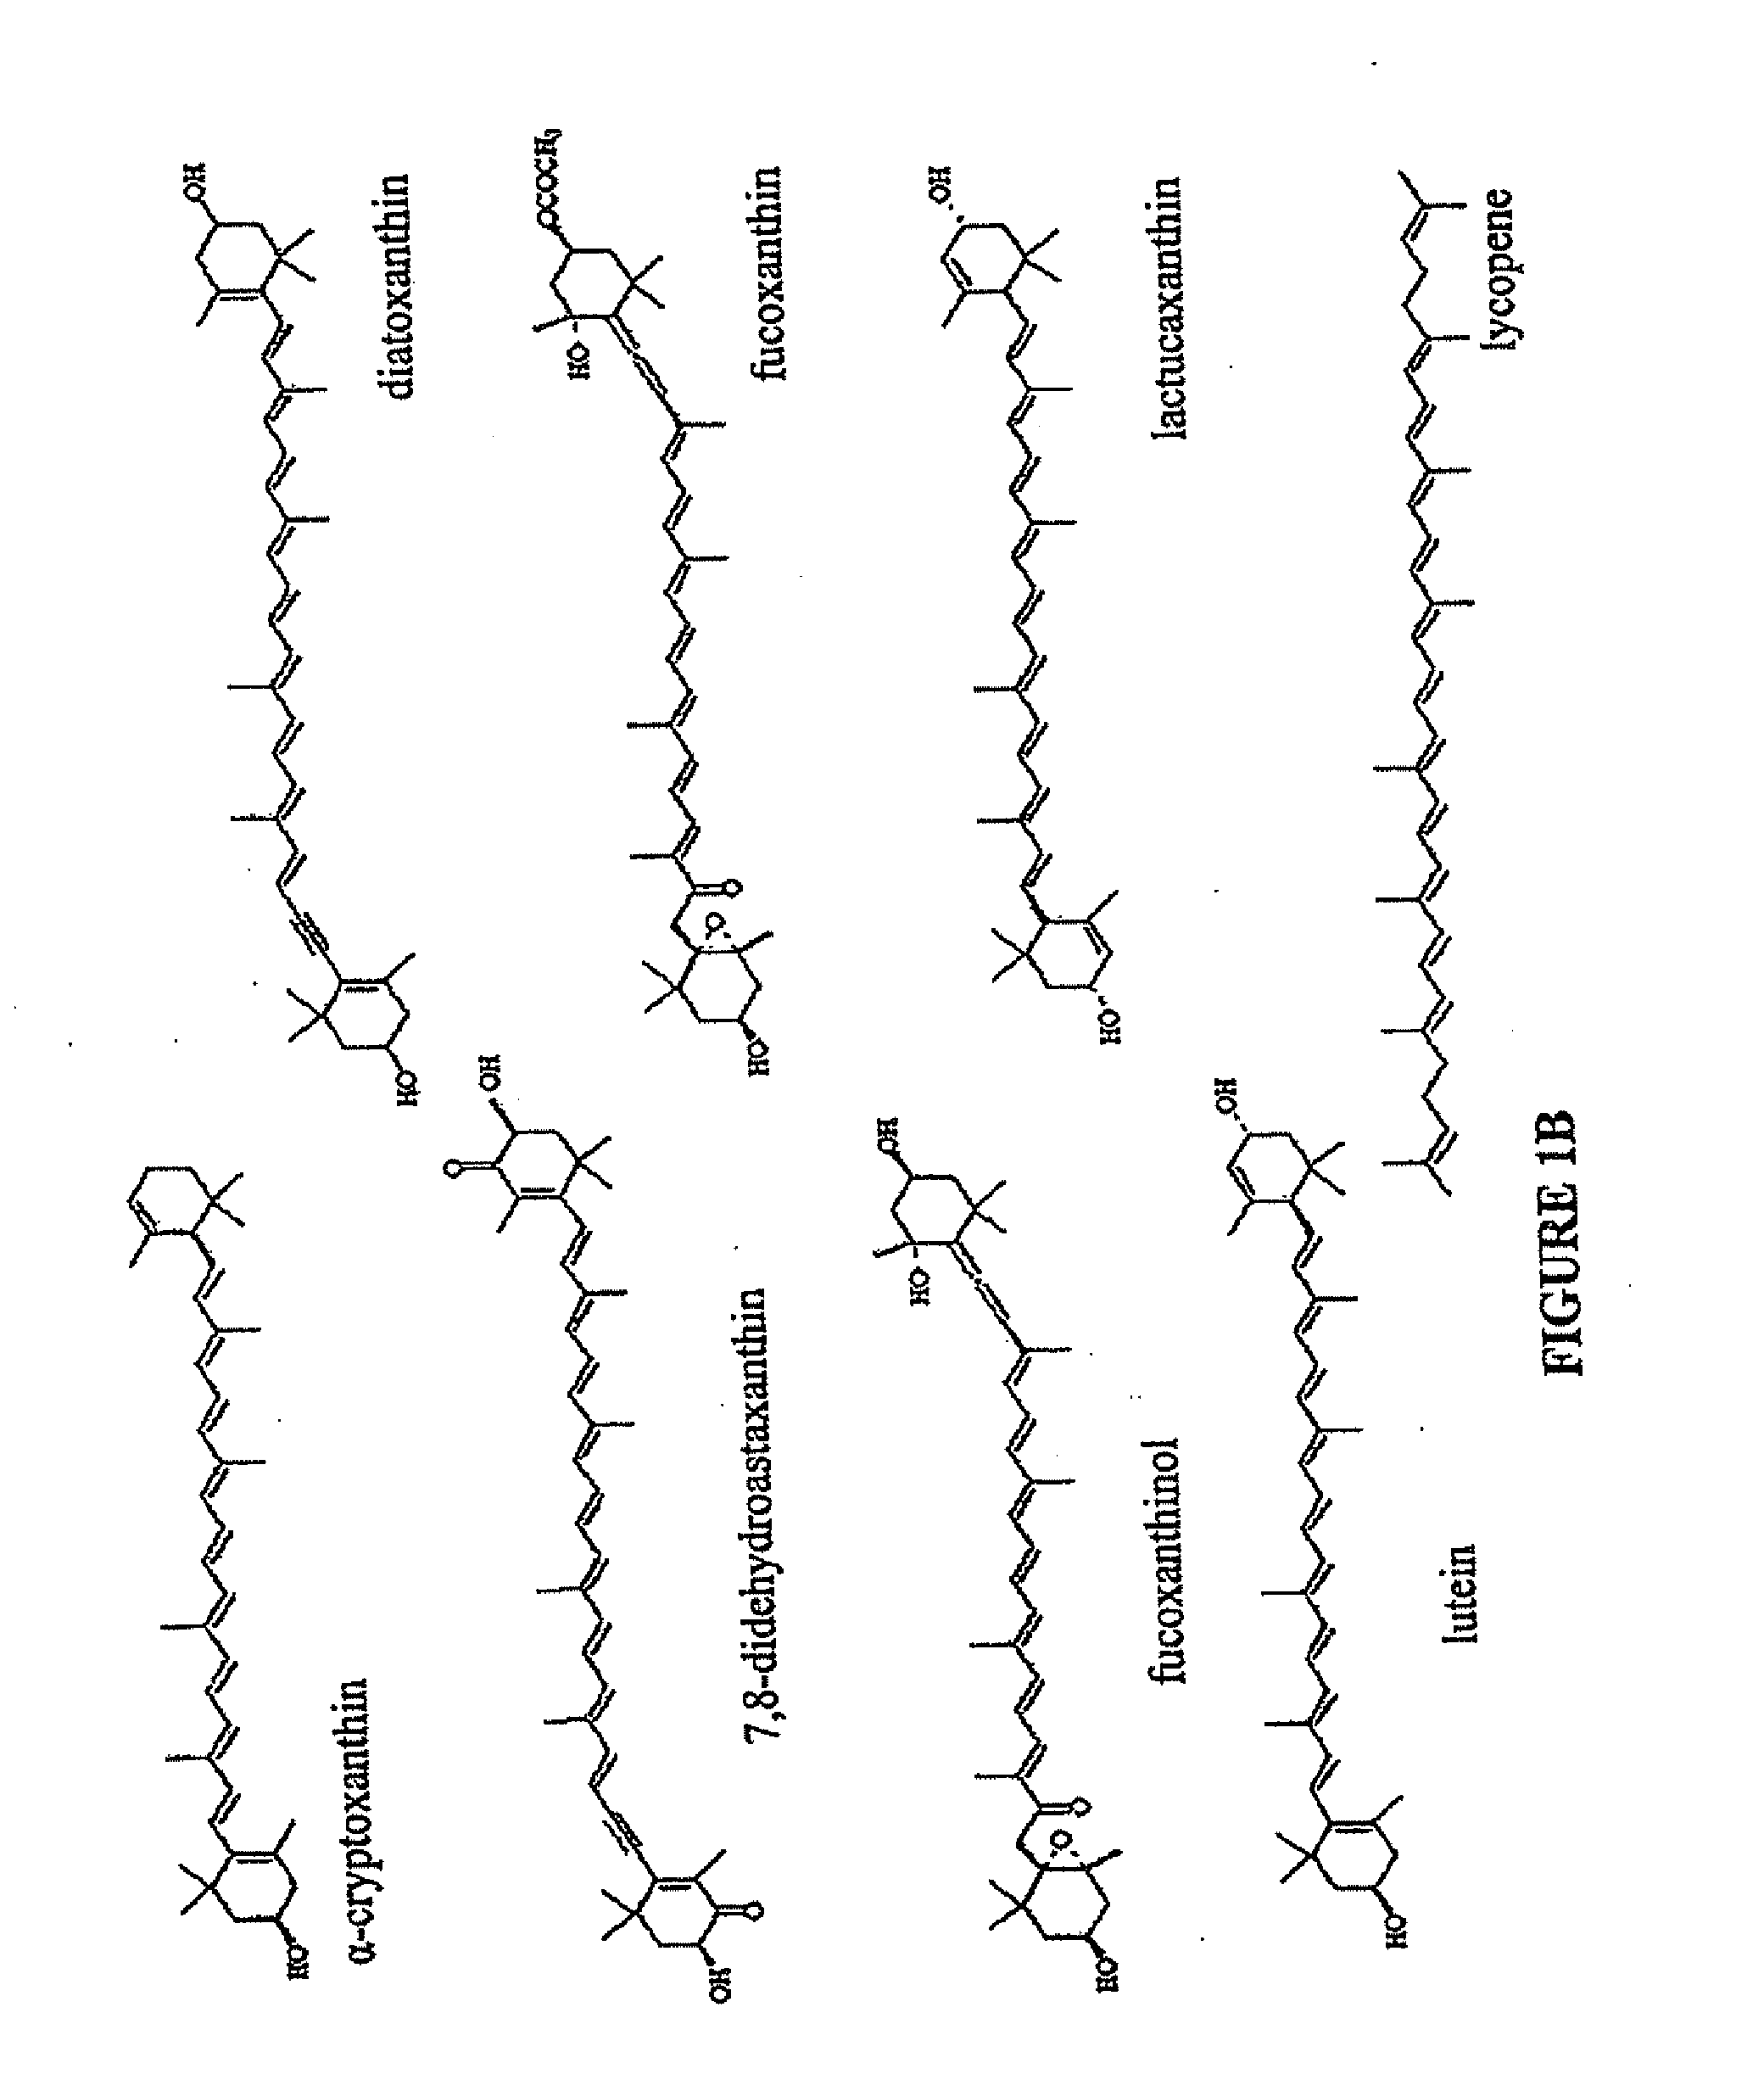 Production of carotenoids in oleaginous yeast and fungi